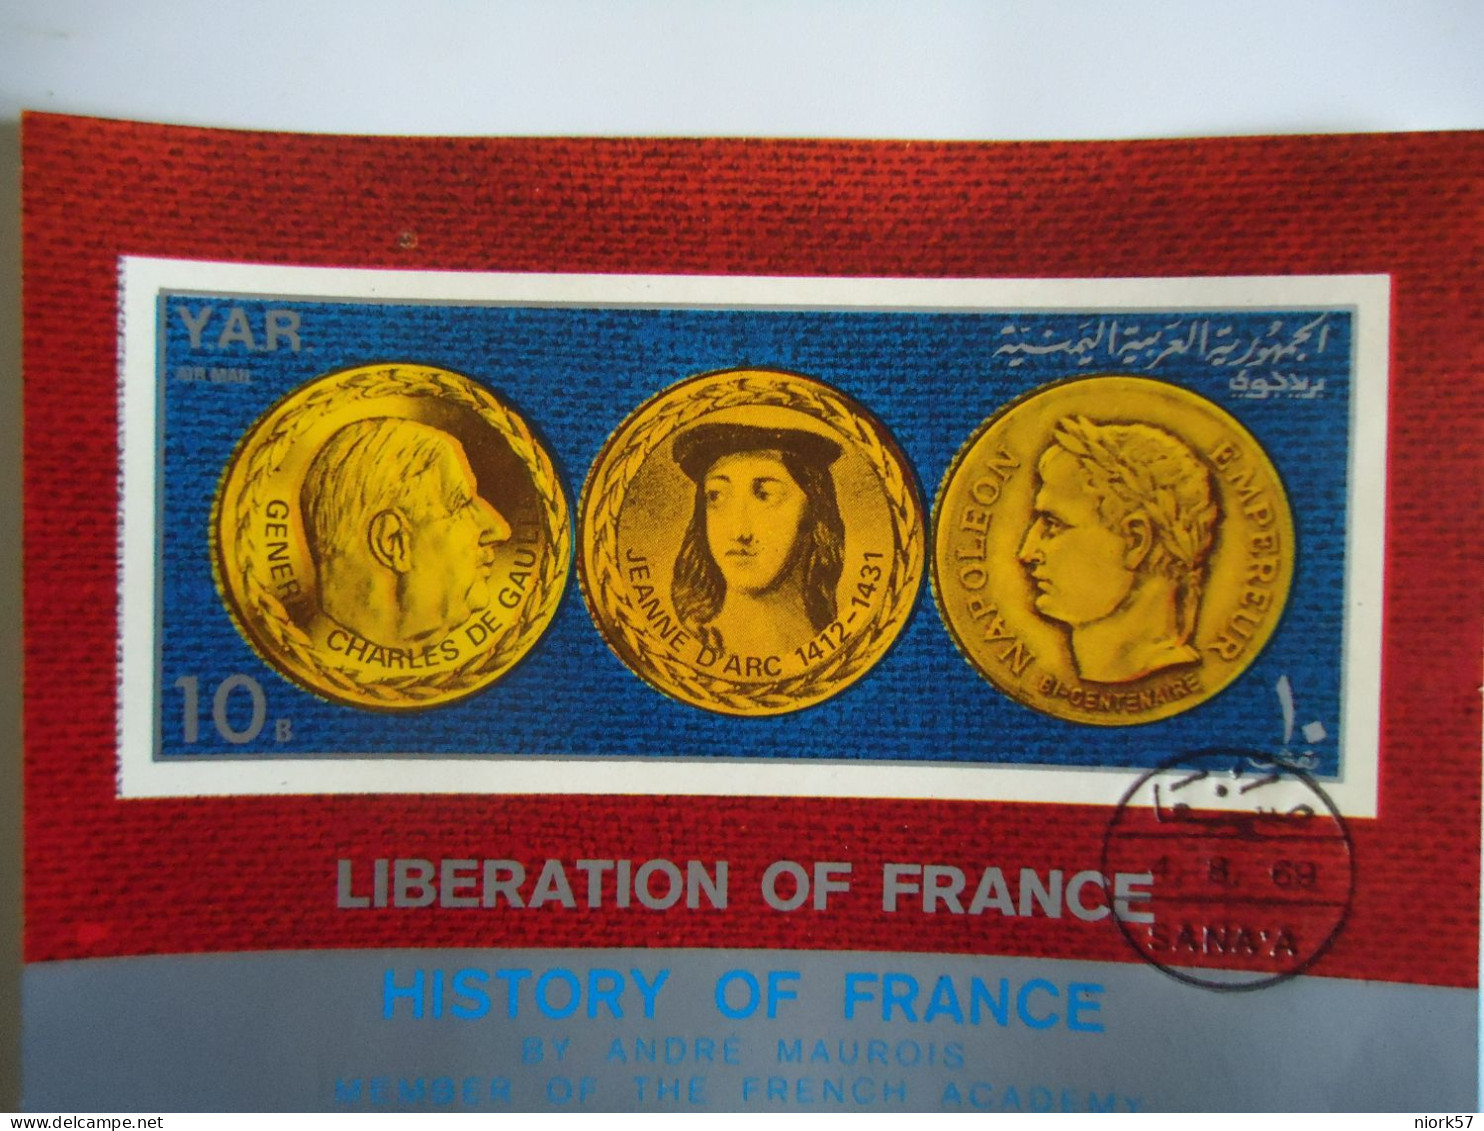 YEMEN  YAR  USED  SHEET HISTORY OF FRANCE COINS - Franse Revolutie